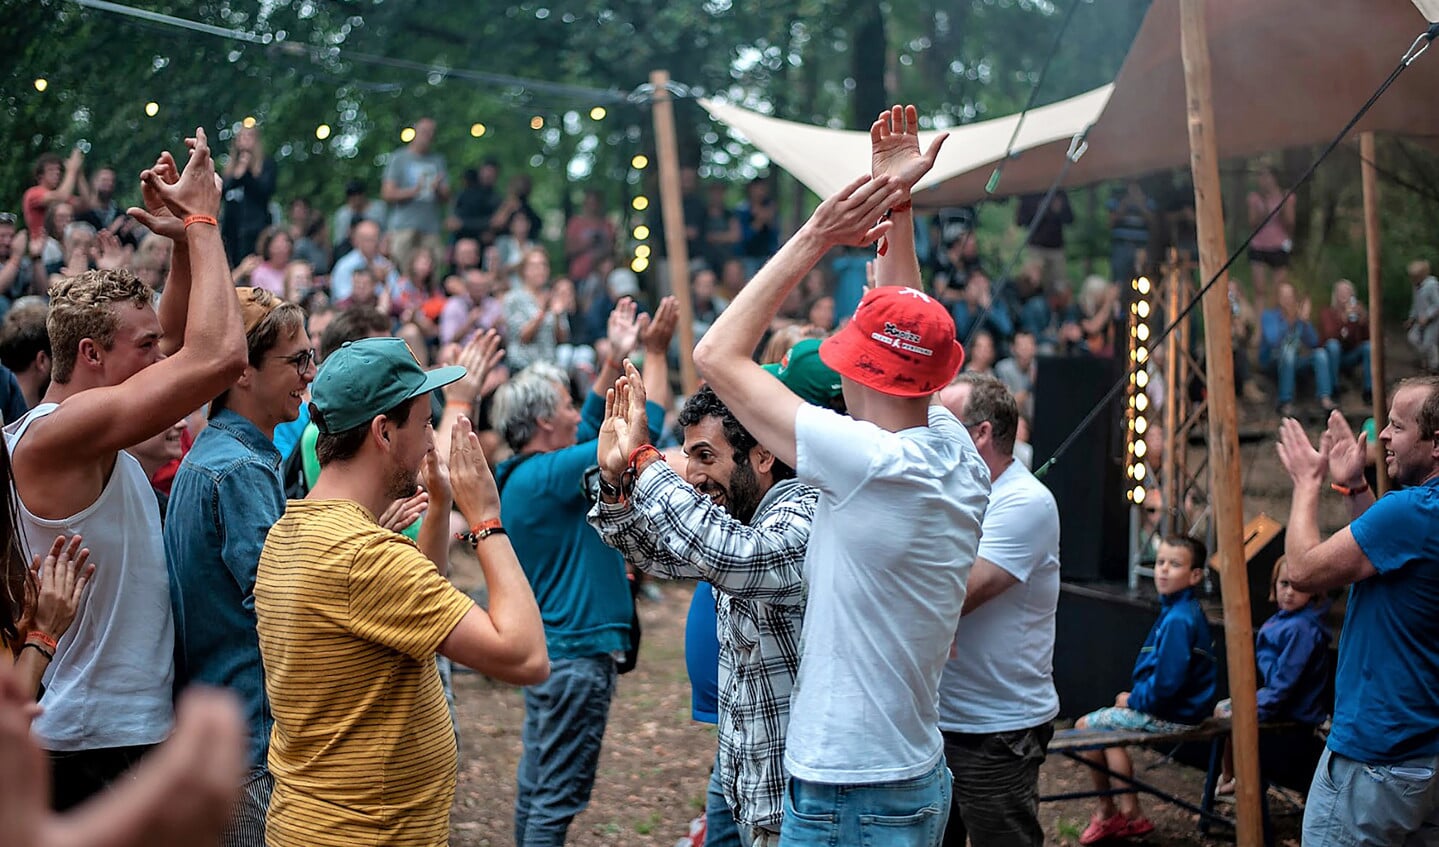 De laatste reguliere editie van Graceland Festival was in 2019.